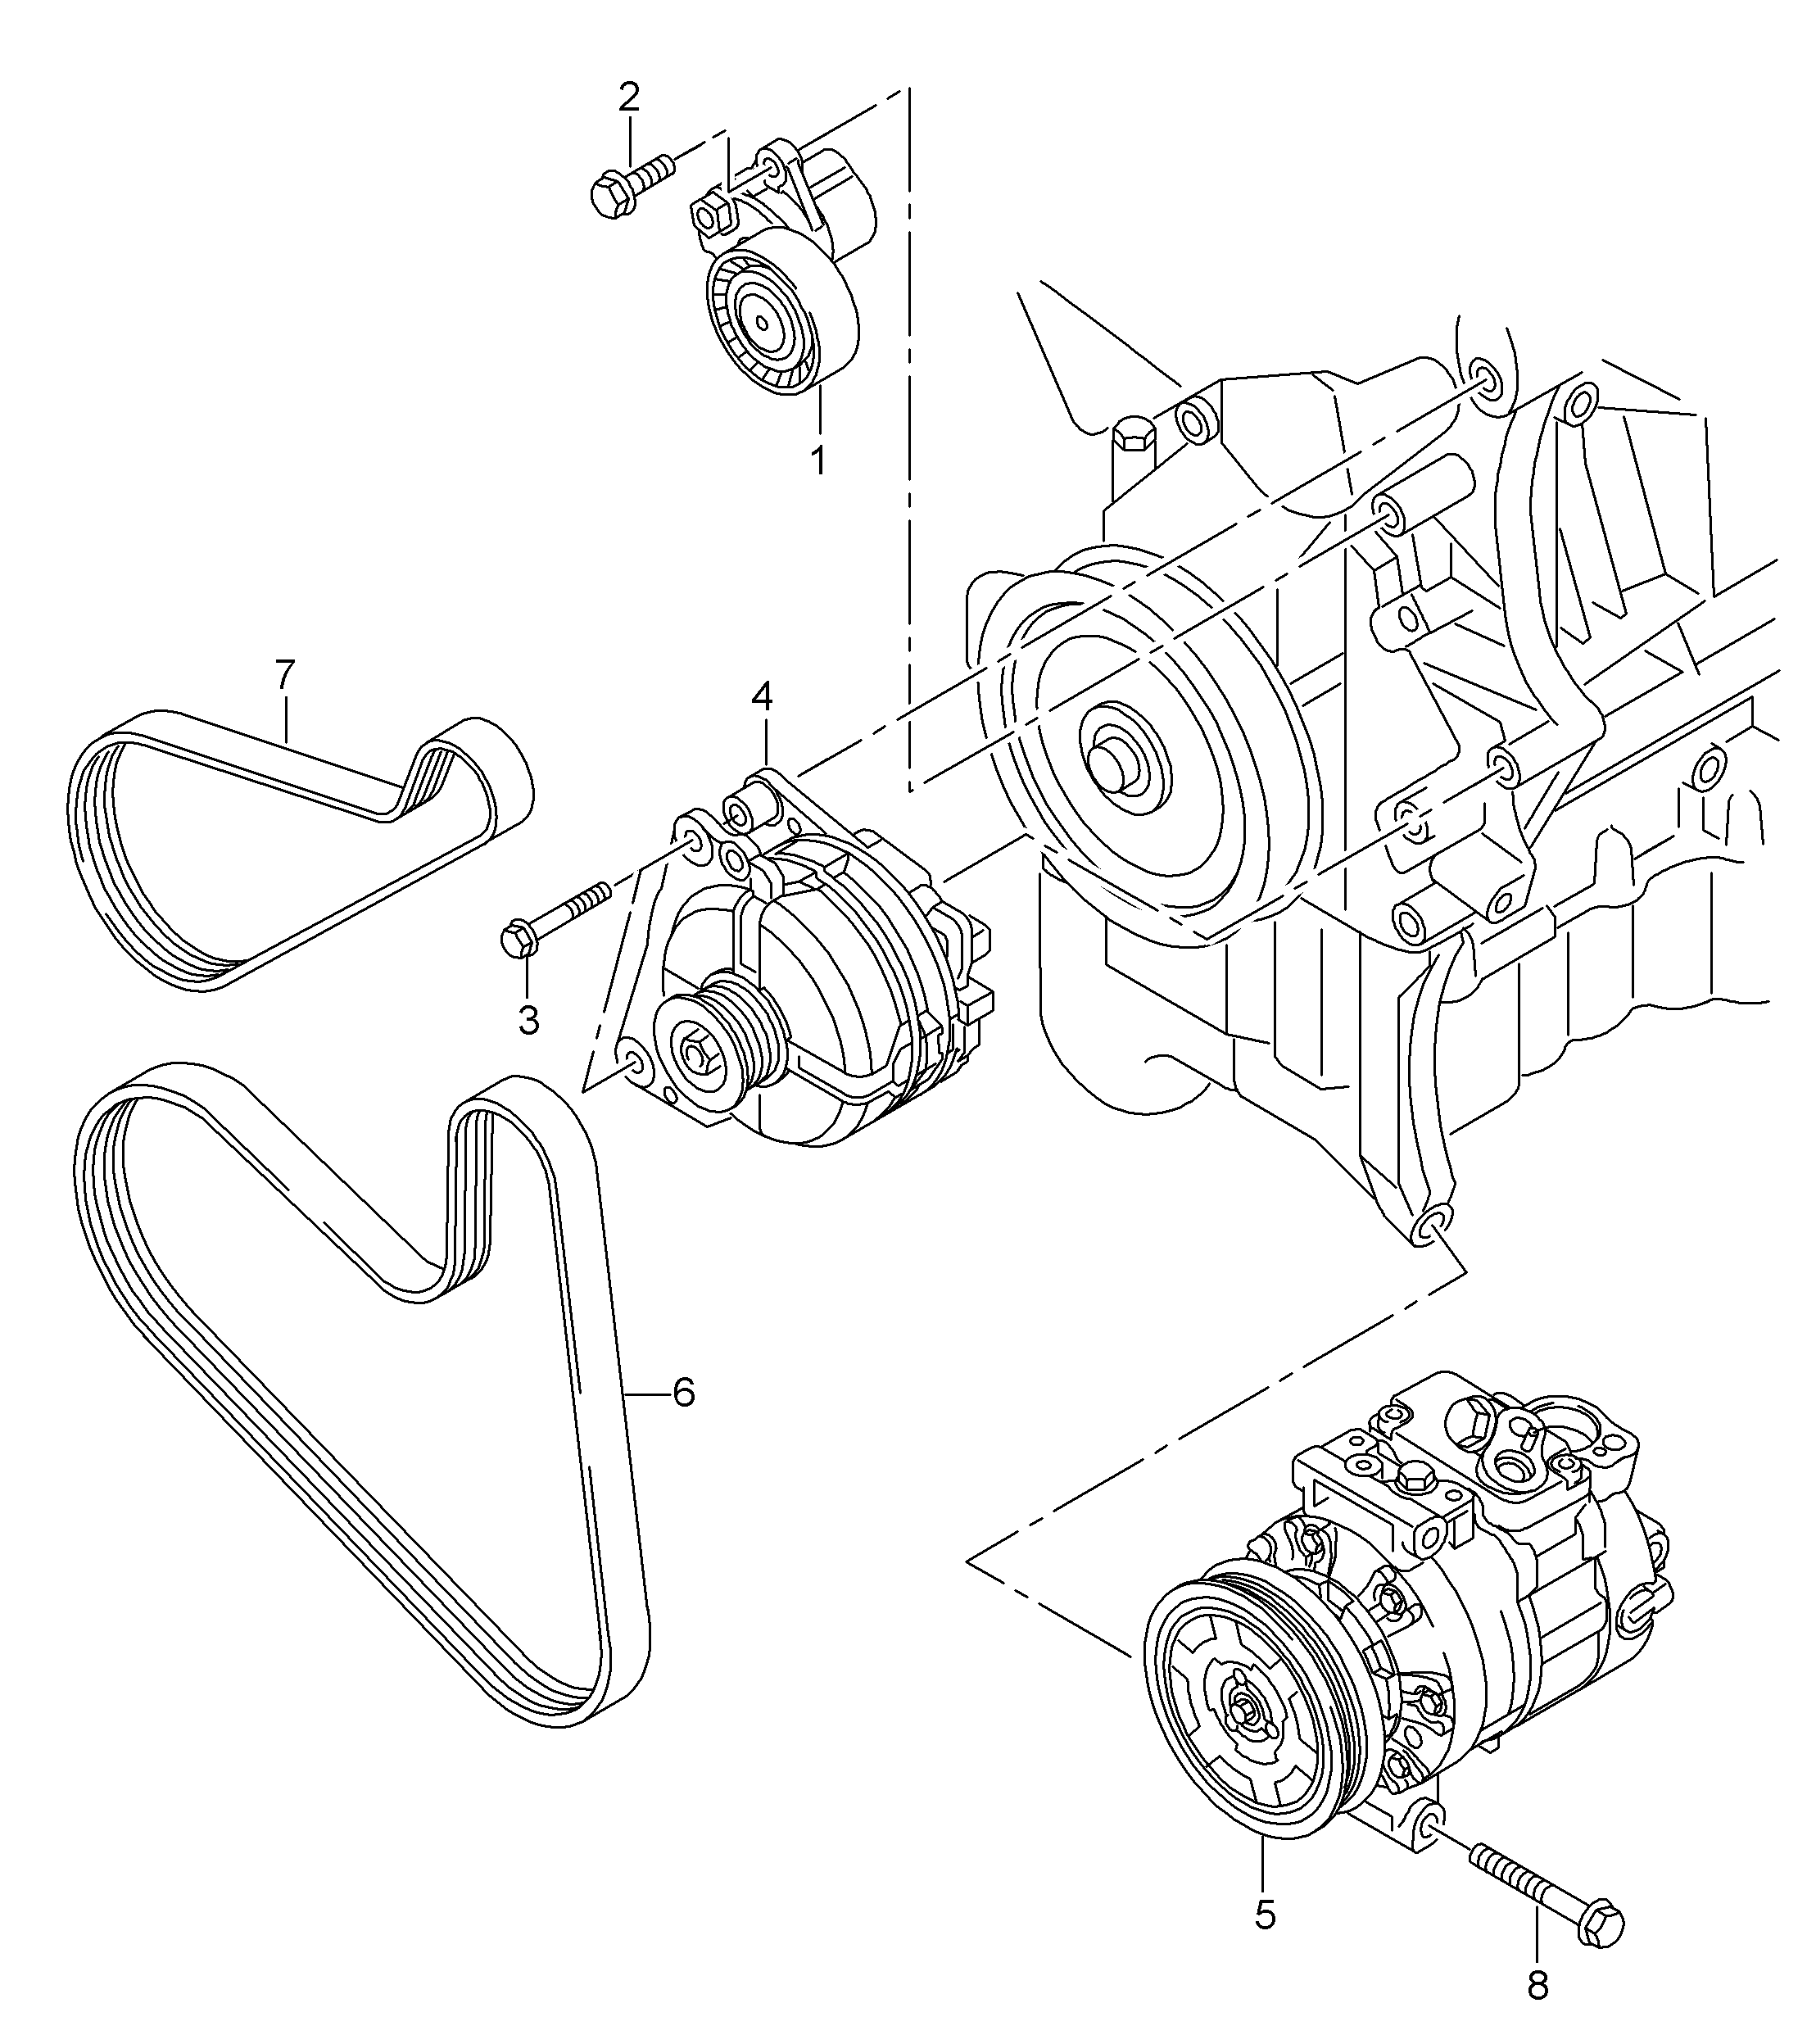 connecting and mounting parts<br>for alternatorPoly-V-belt 1.4ltr. - Golf/Variant/4Motion - golf